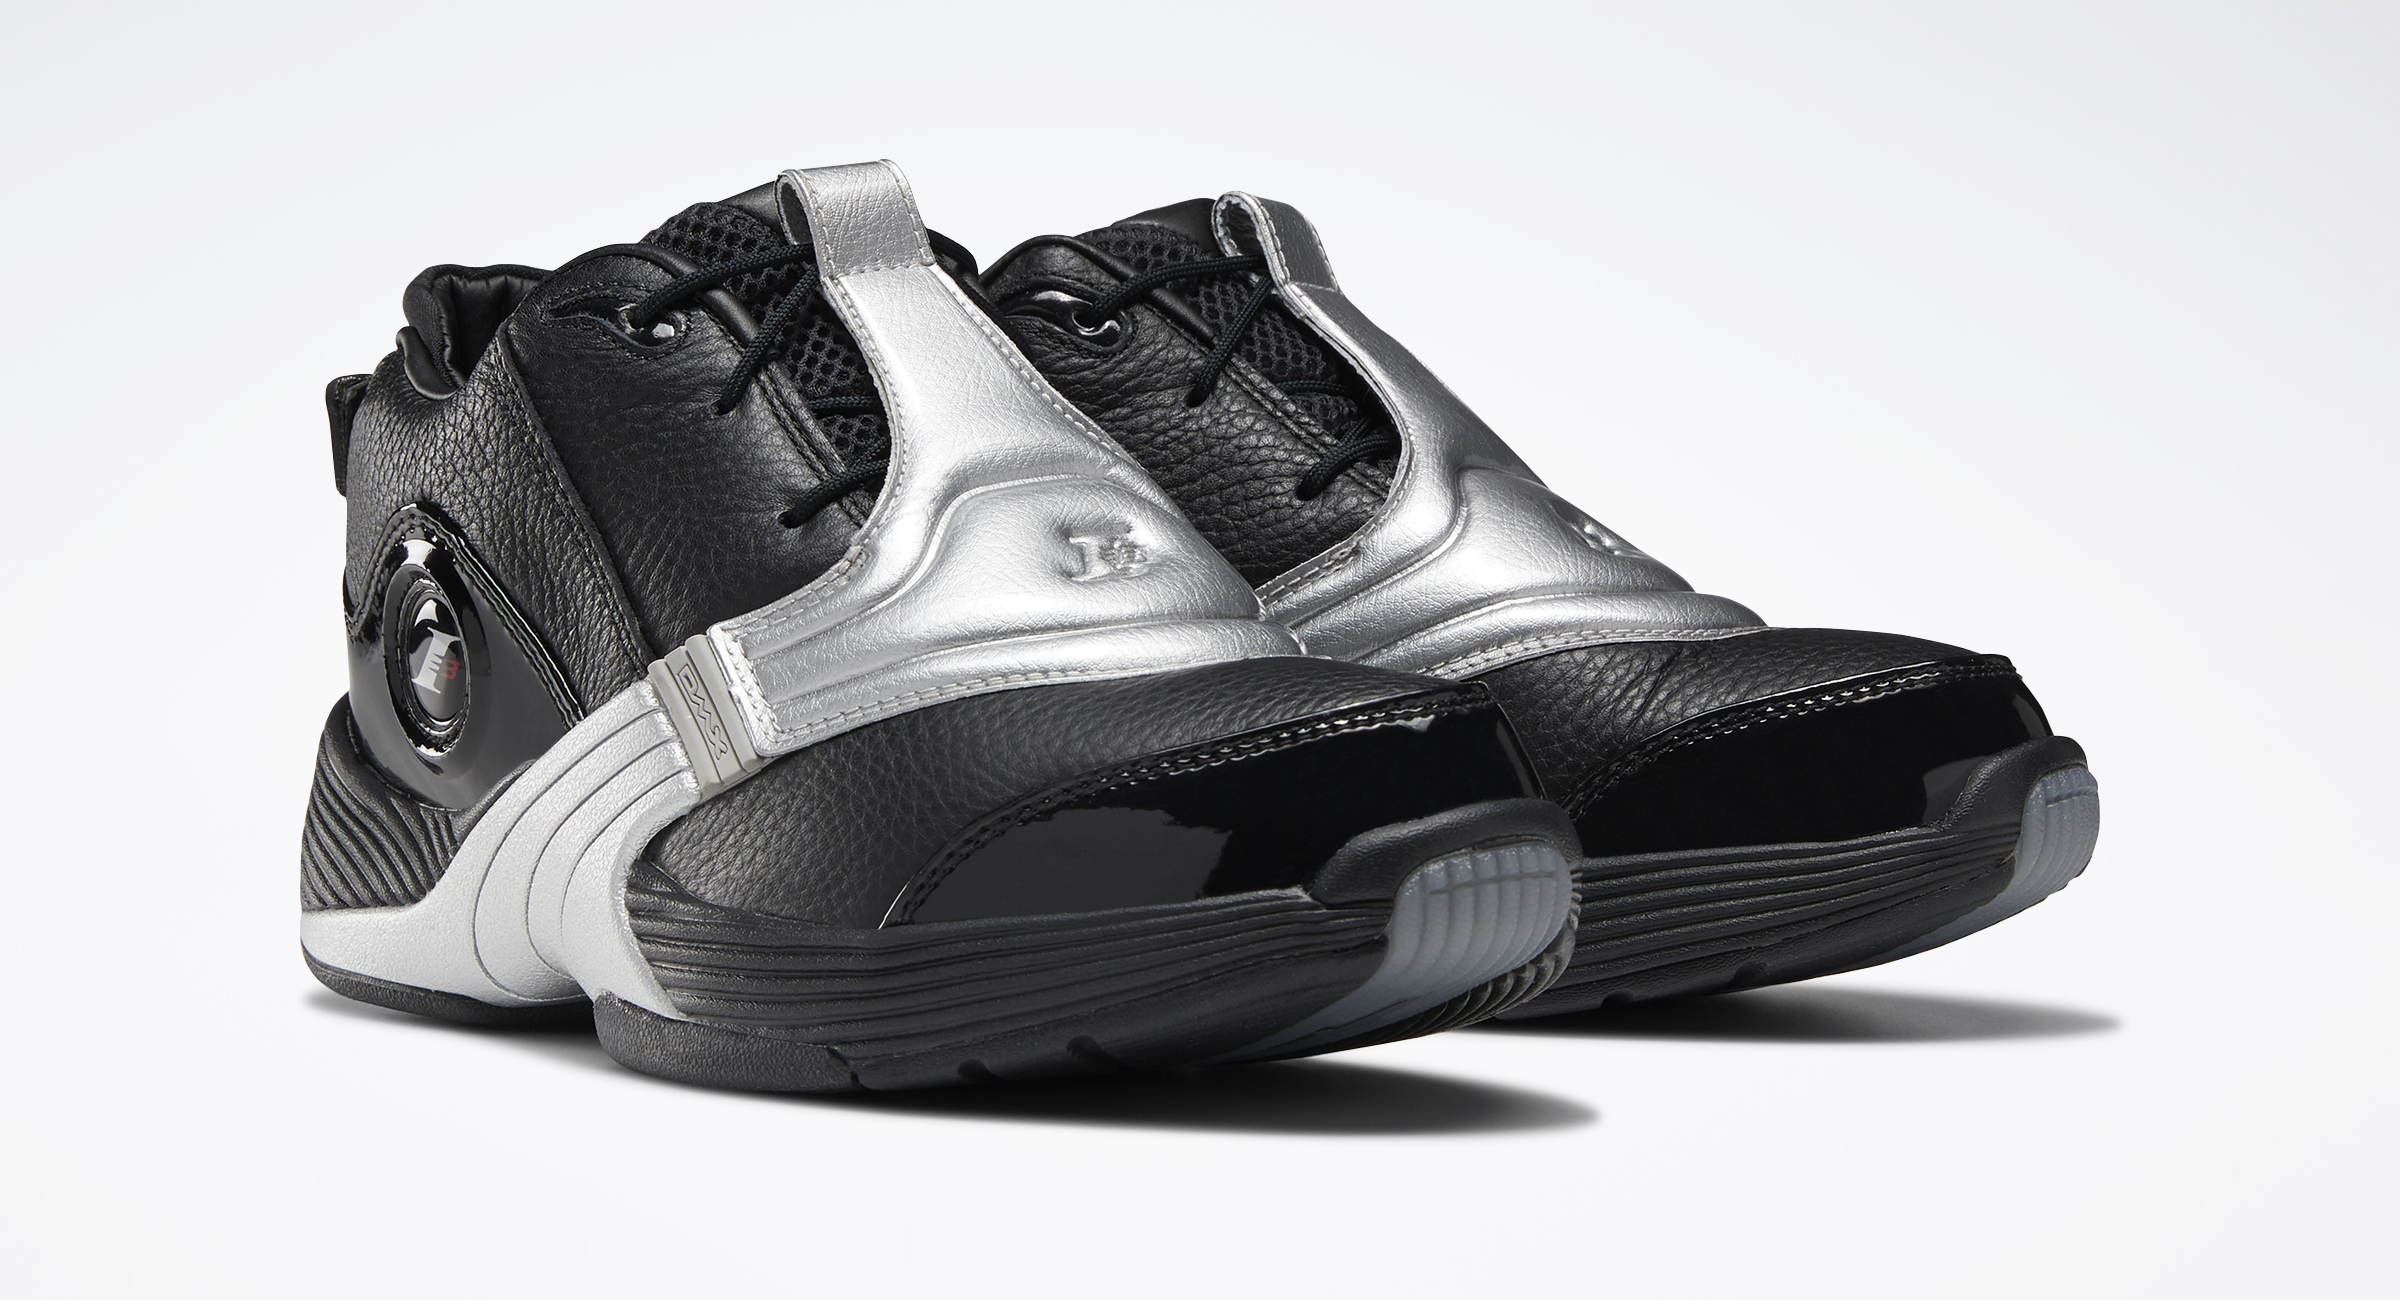 PROMO: Reebok’s Retro Basketball Sneakers Are Making A Comeback